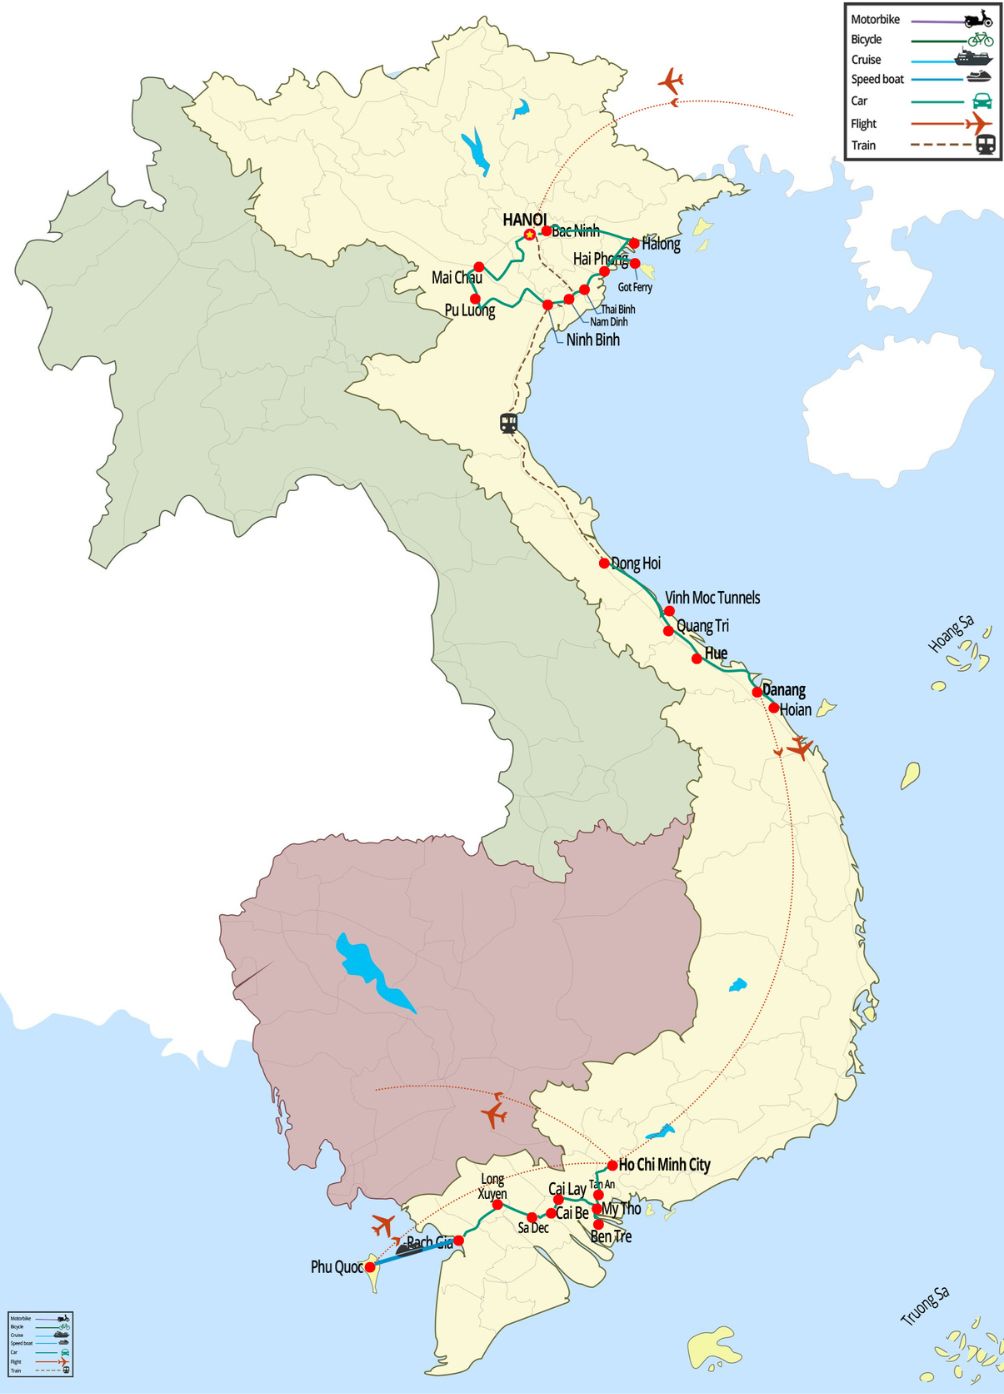 Vietnam travel, vietnam itinerary, seaside stay vietnam, vacation in vietnam, Phu Quoc island, Halong bay, Cat Ba island, Con Dao, Nha Trang, Quy Nhon, Hue, Hoi An, Da nang